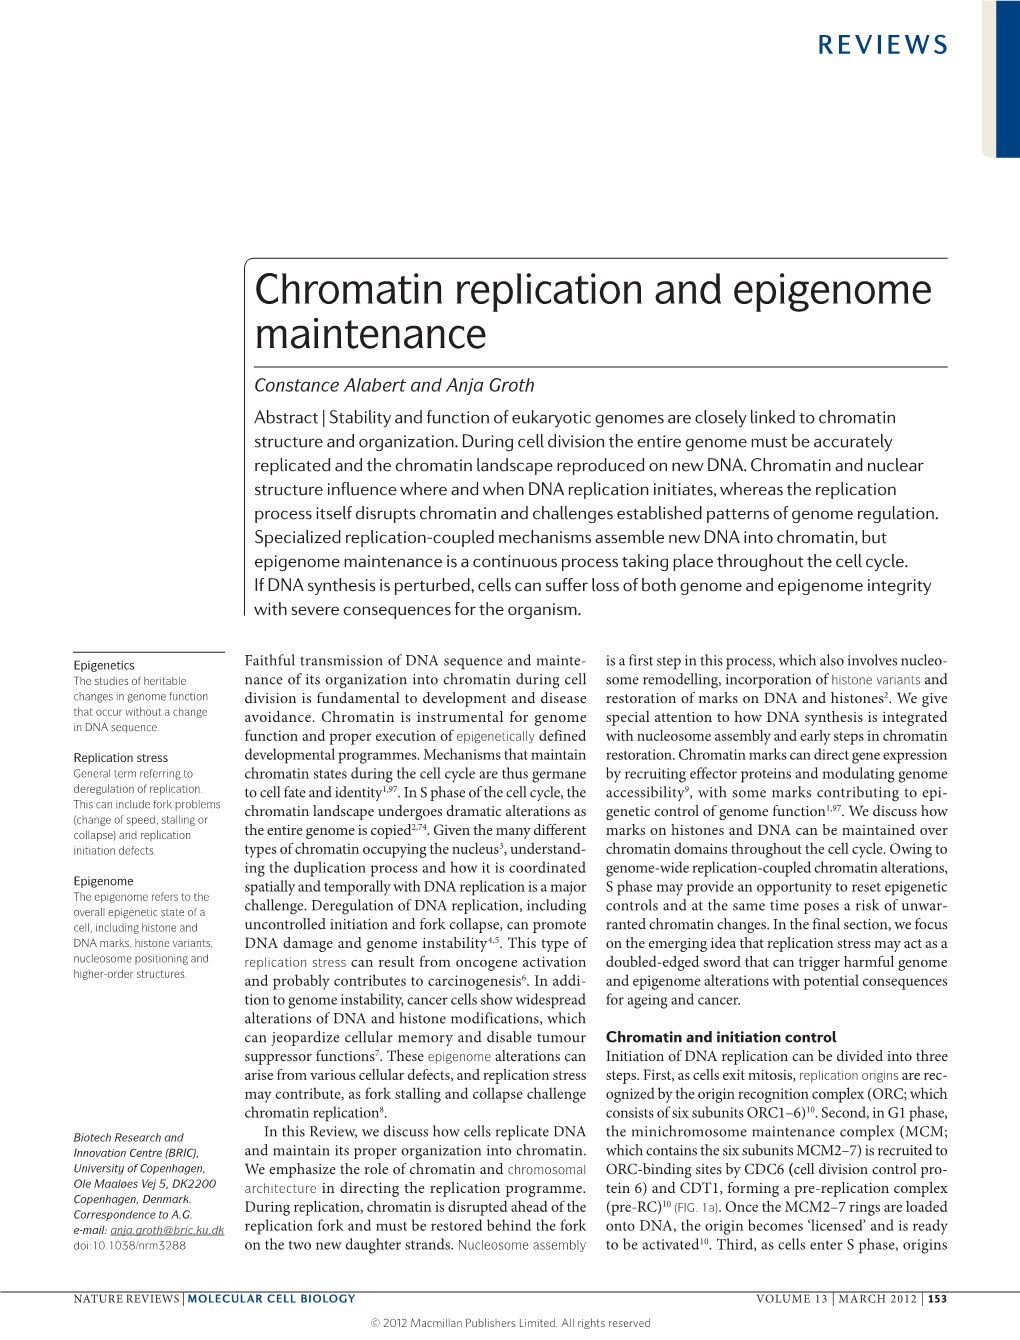 Chromatin Replication and Epigenome Maintenance